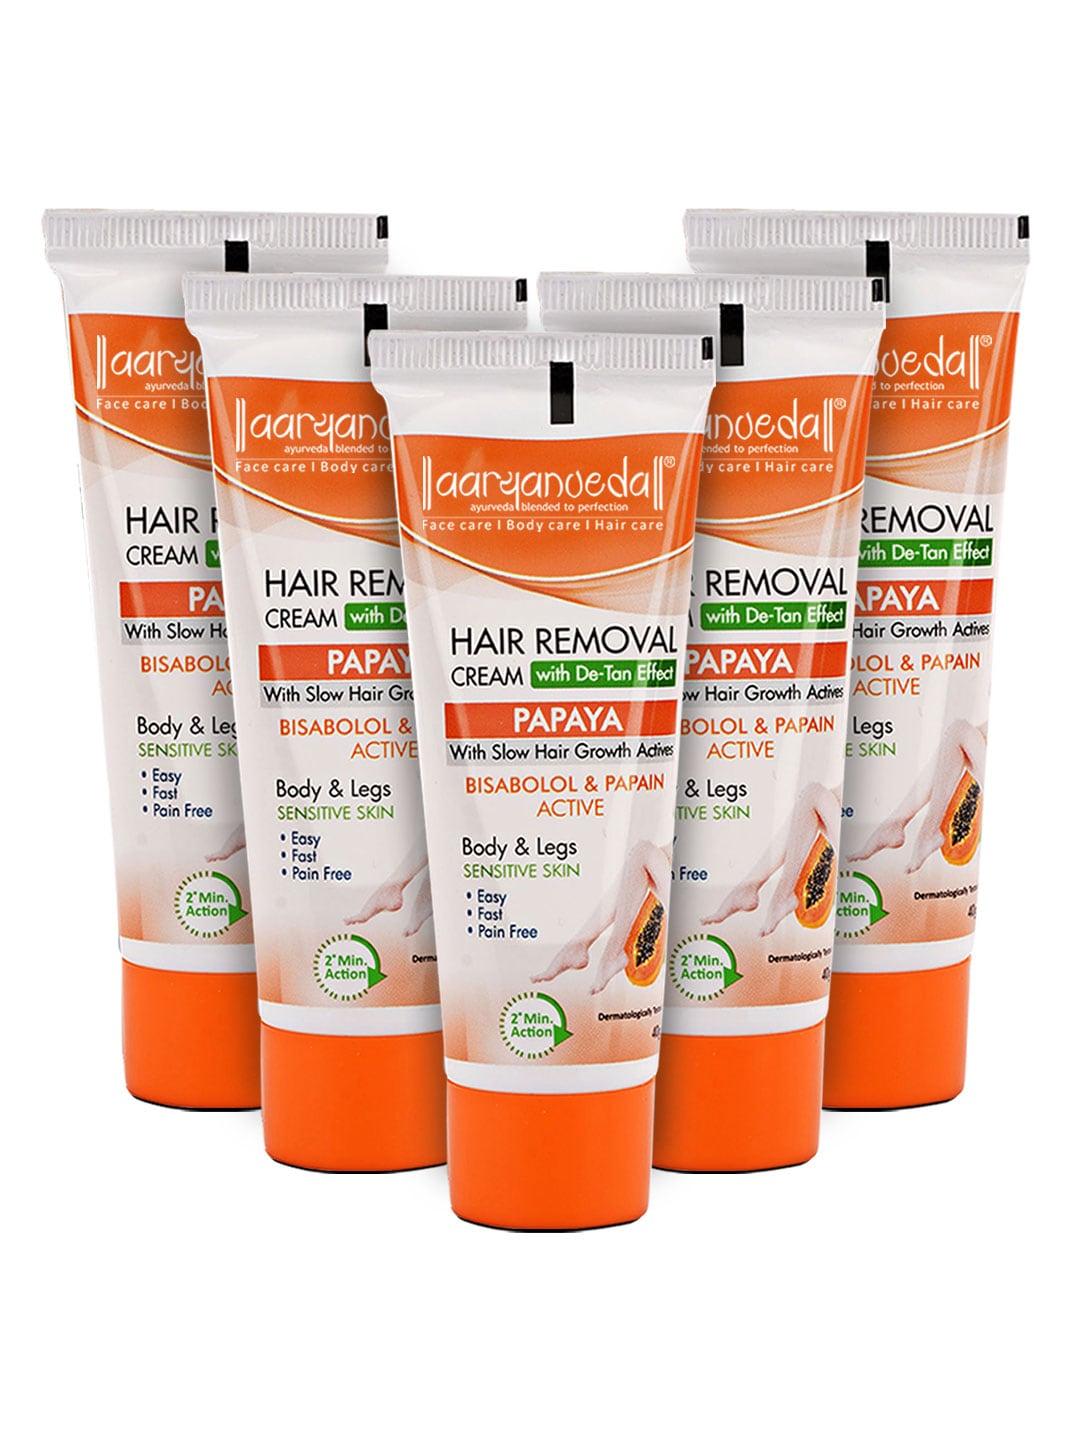 aryanveda set of 5 papaya hair removal cream with detan effect for sensitive skin-40g each